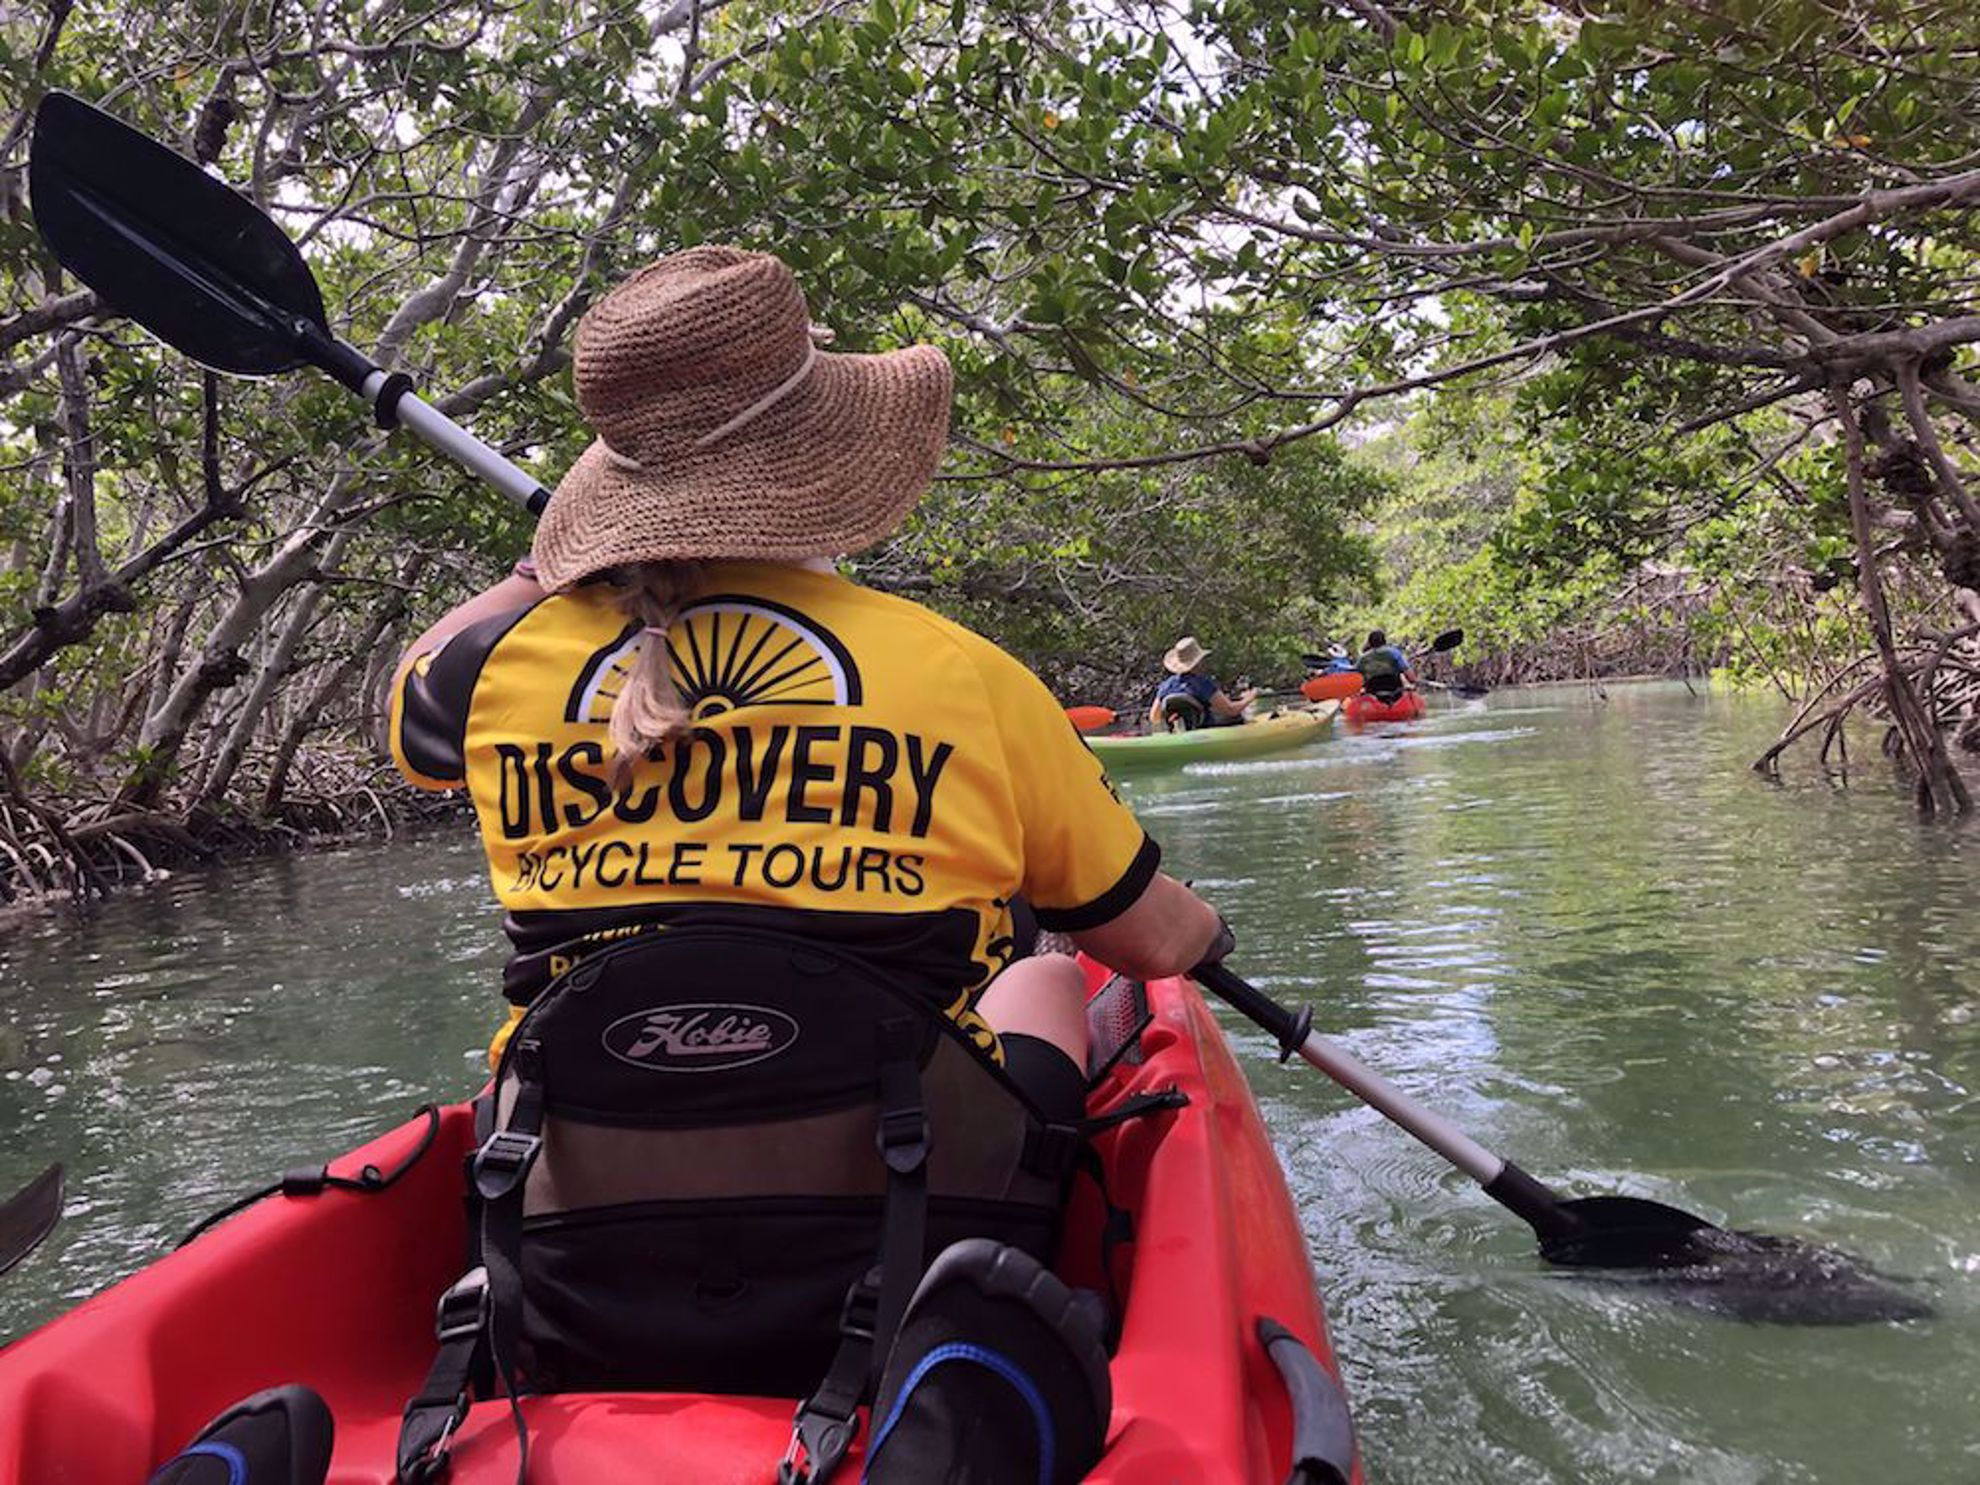 Kayaking in mangroves